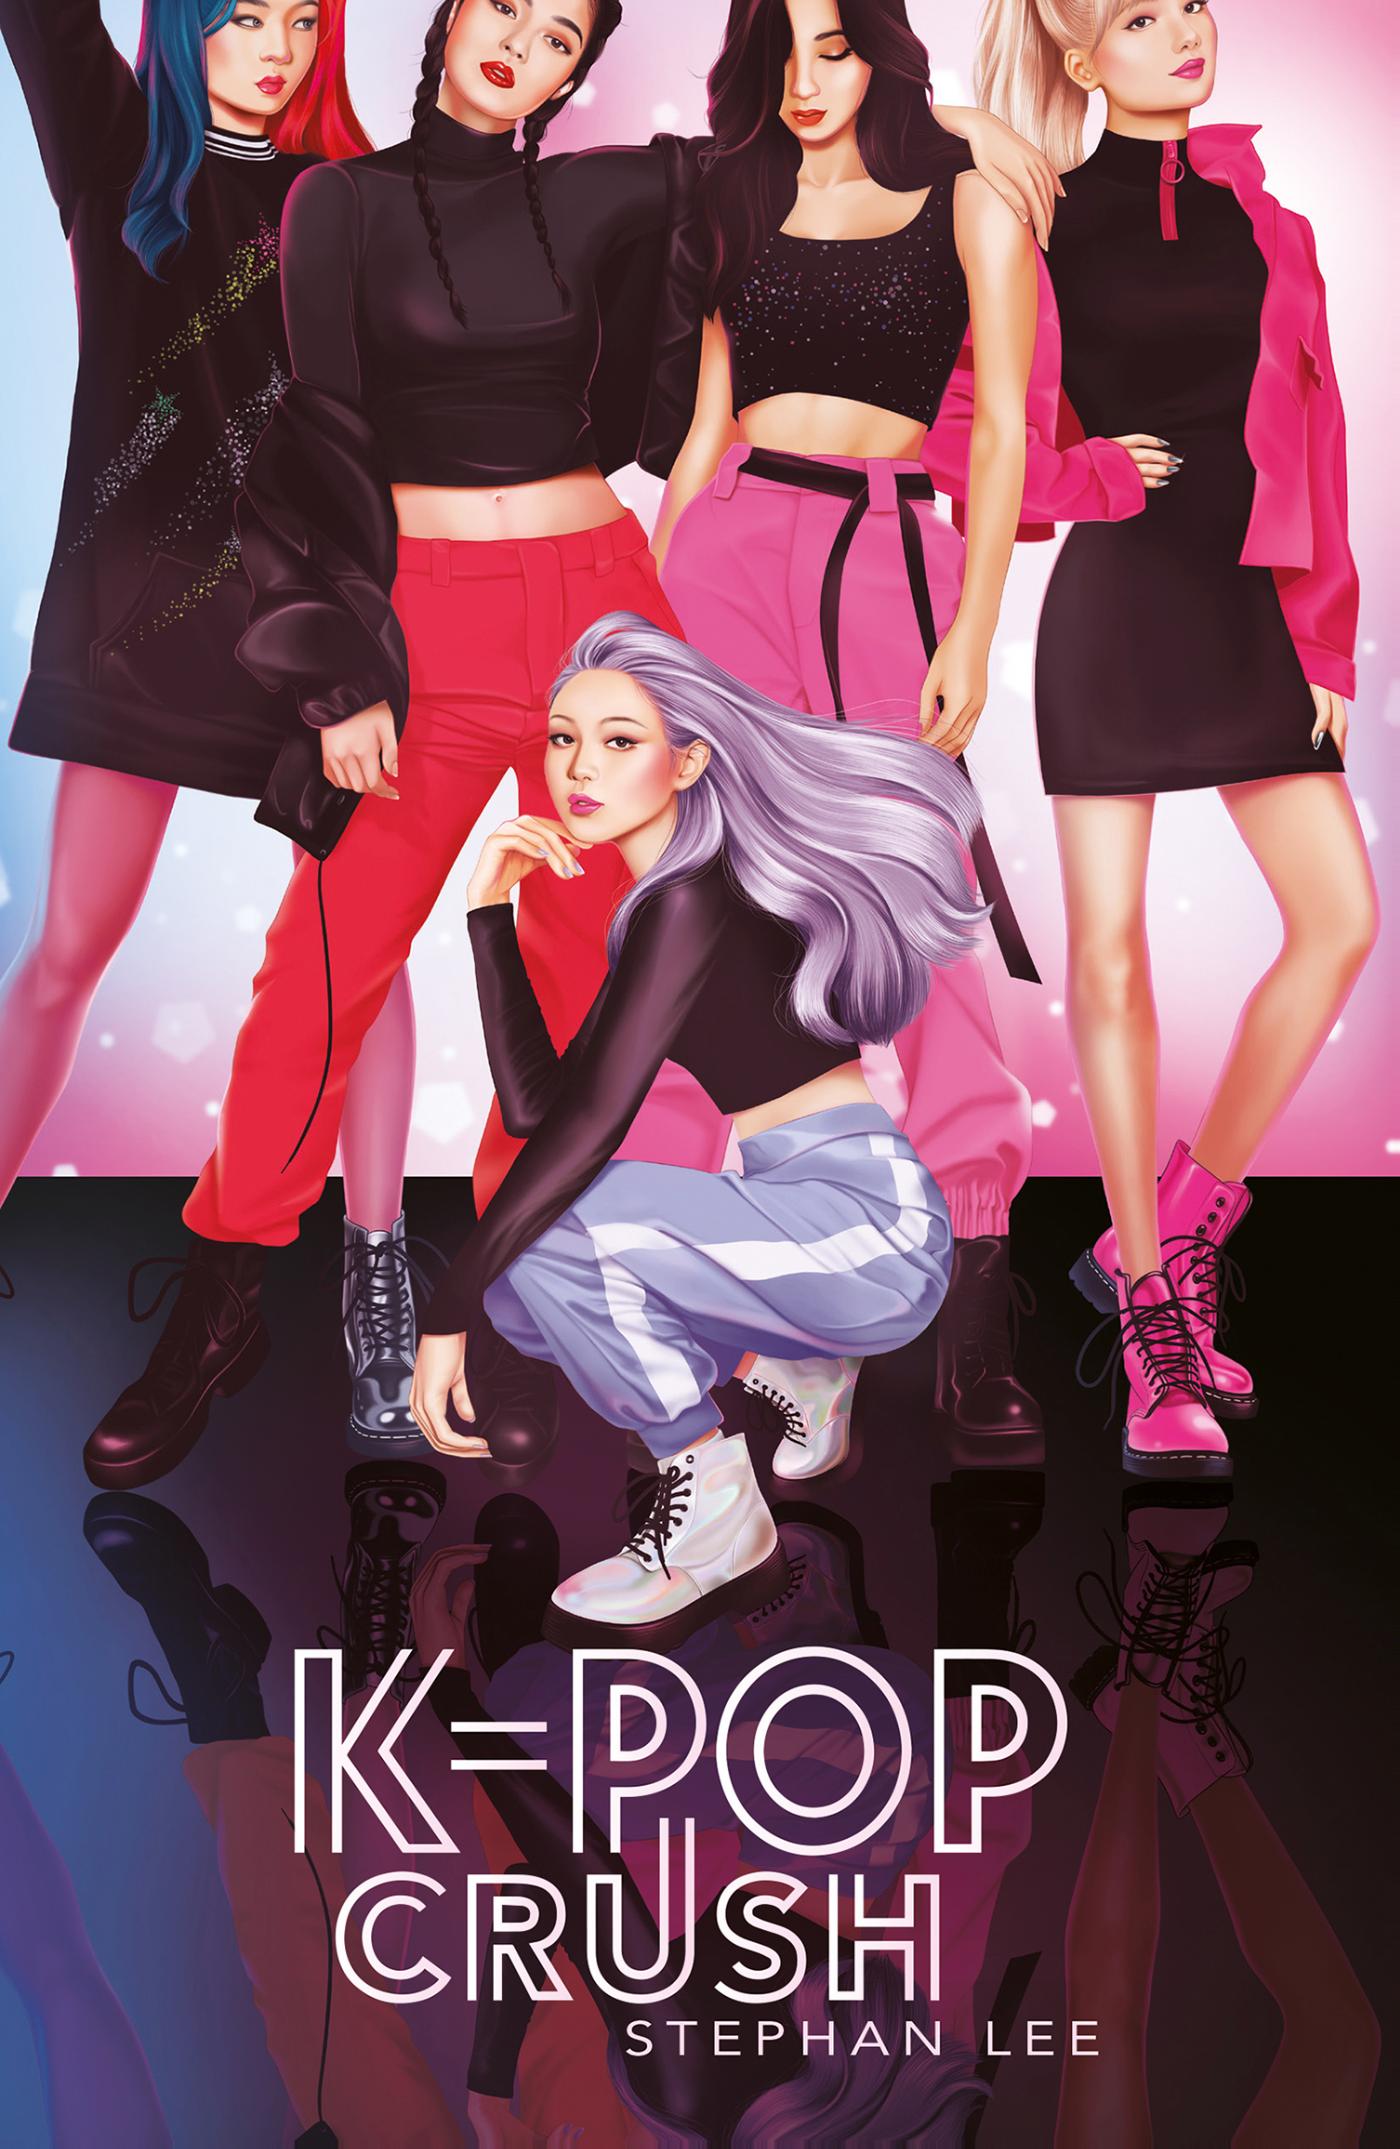 K-pop crush